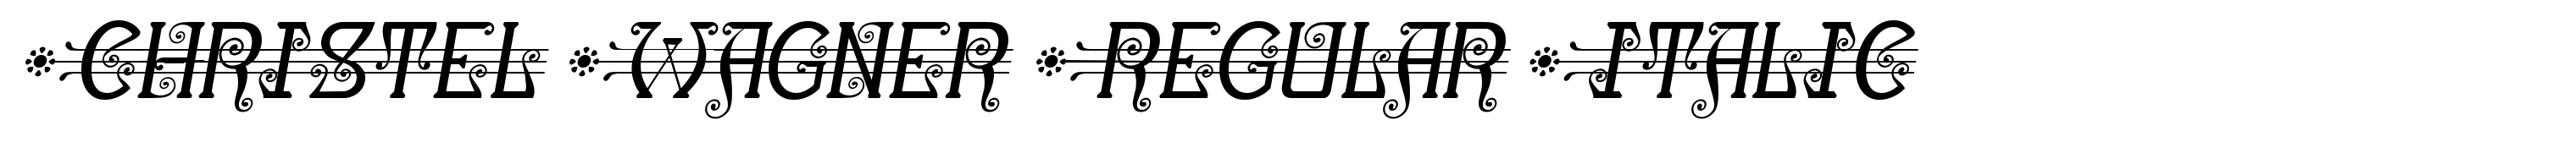 Christel Wagner Regular Italic